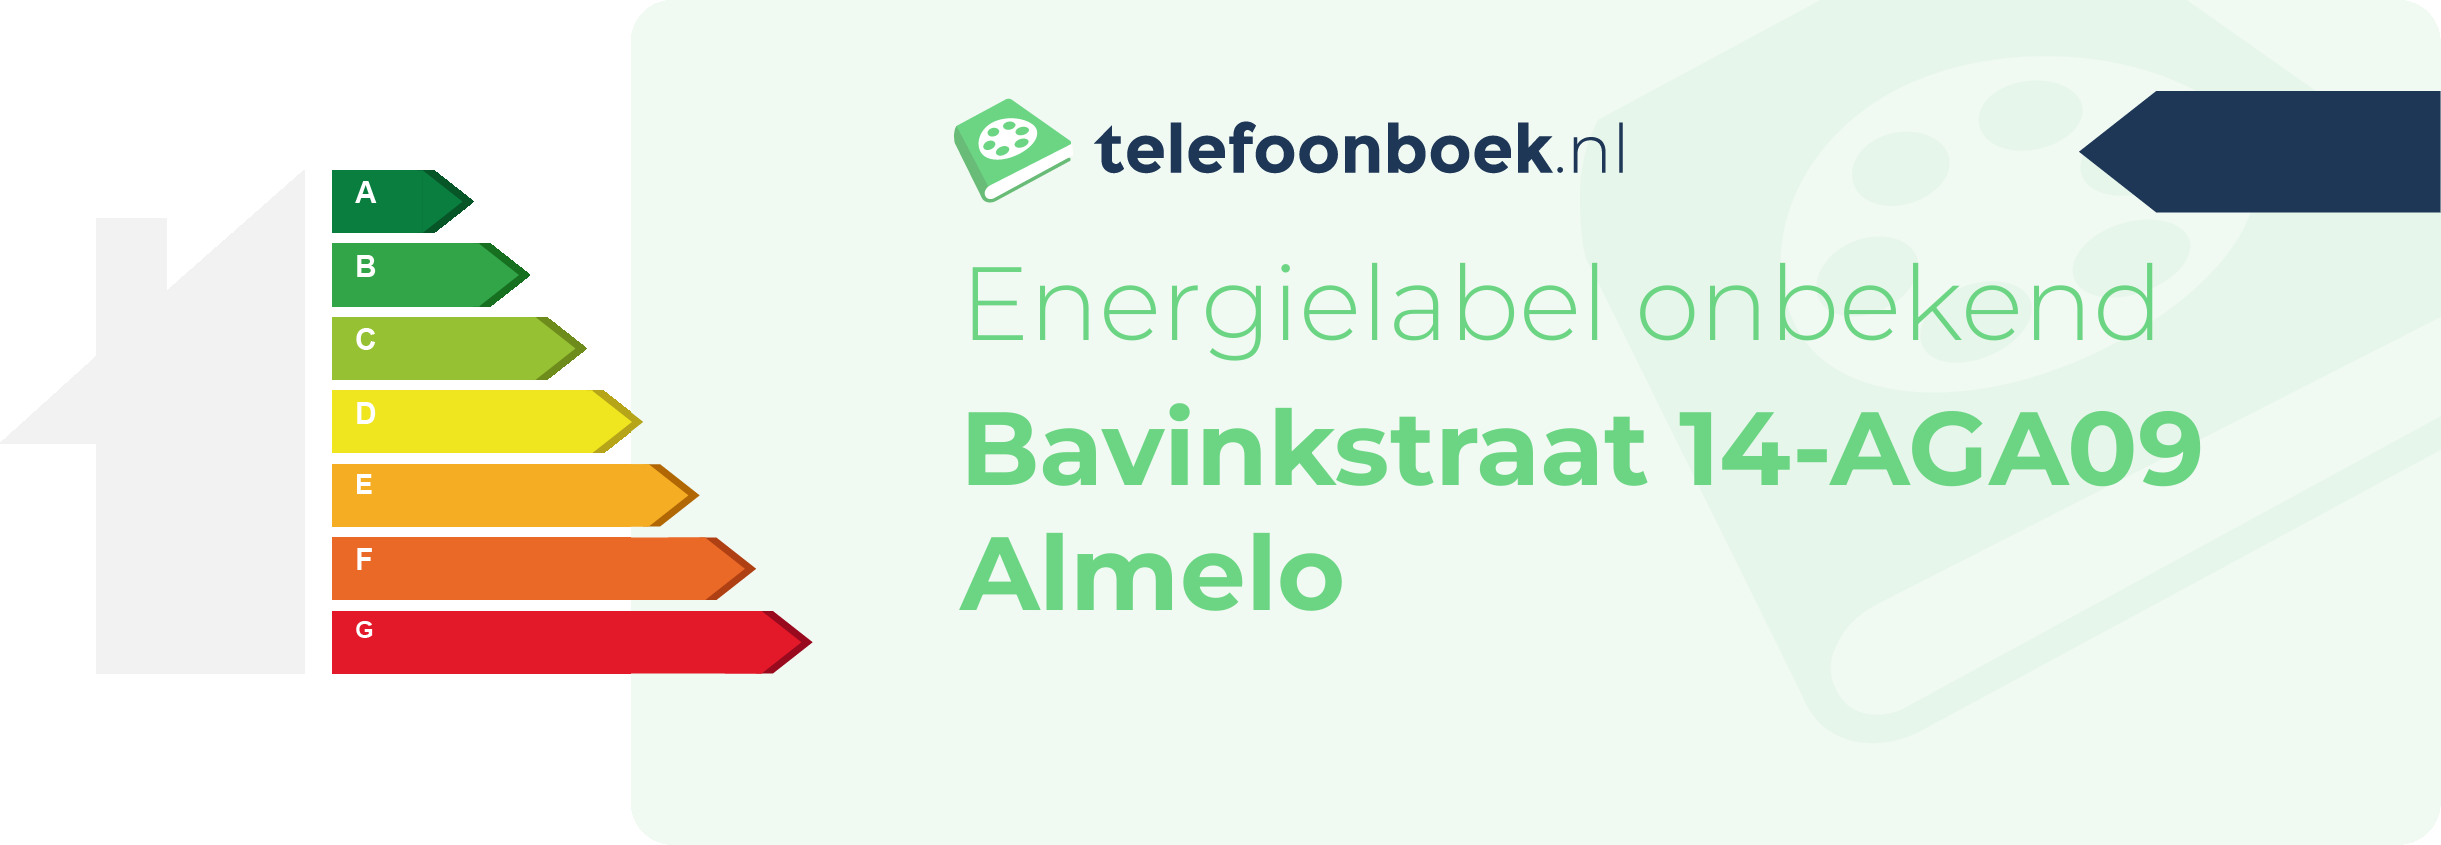 Energielabel Bavinkstraat 14-AGA09 Almelo